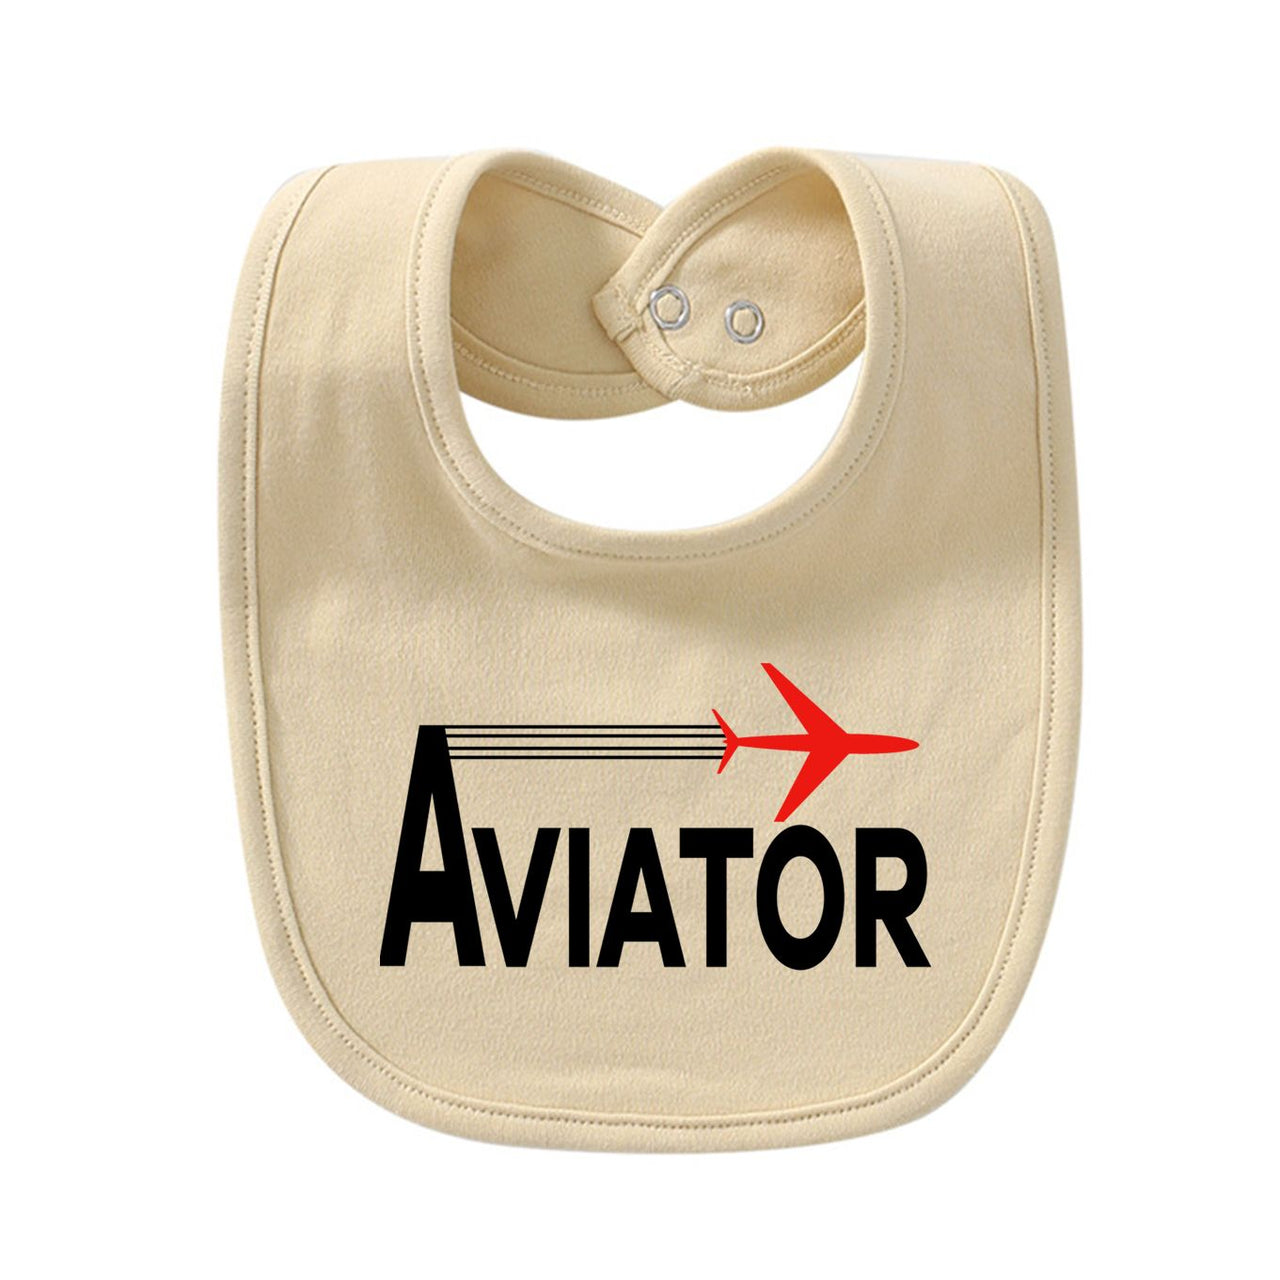 Aviator Designed Baby Saliva & Feeding Towels